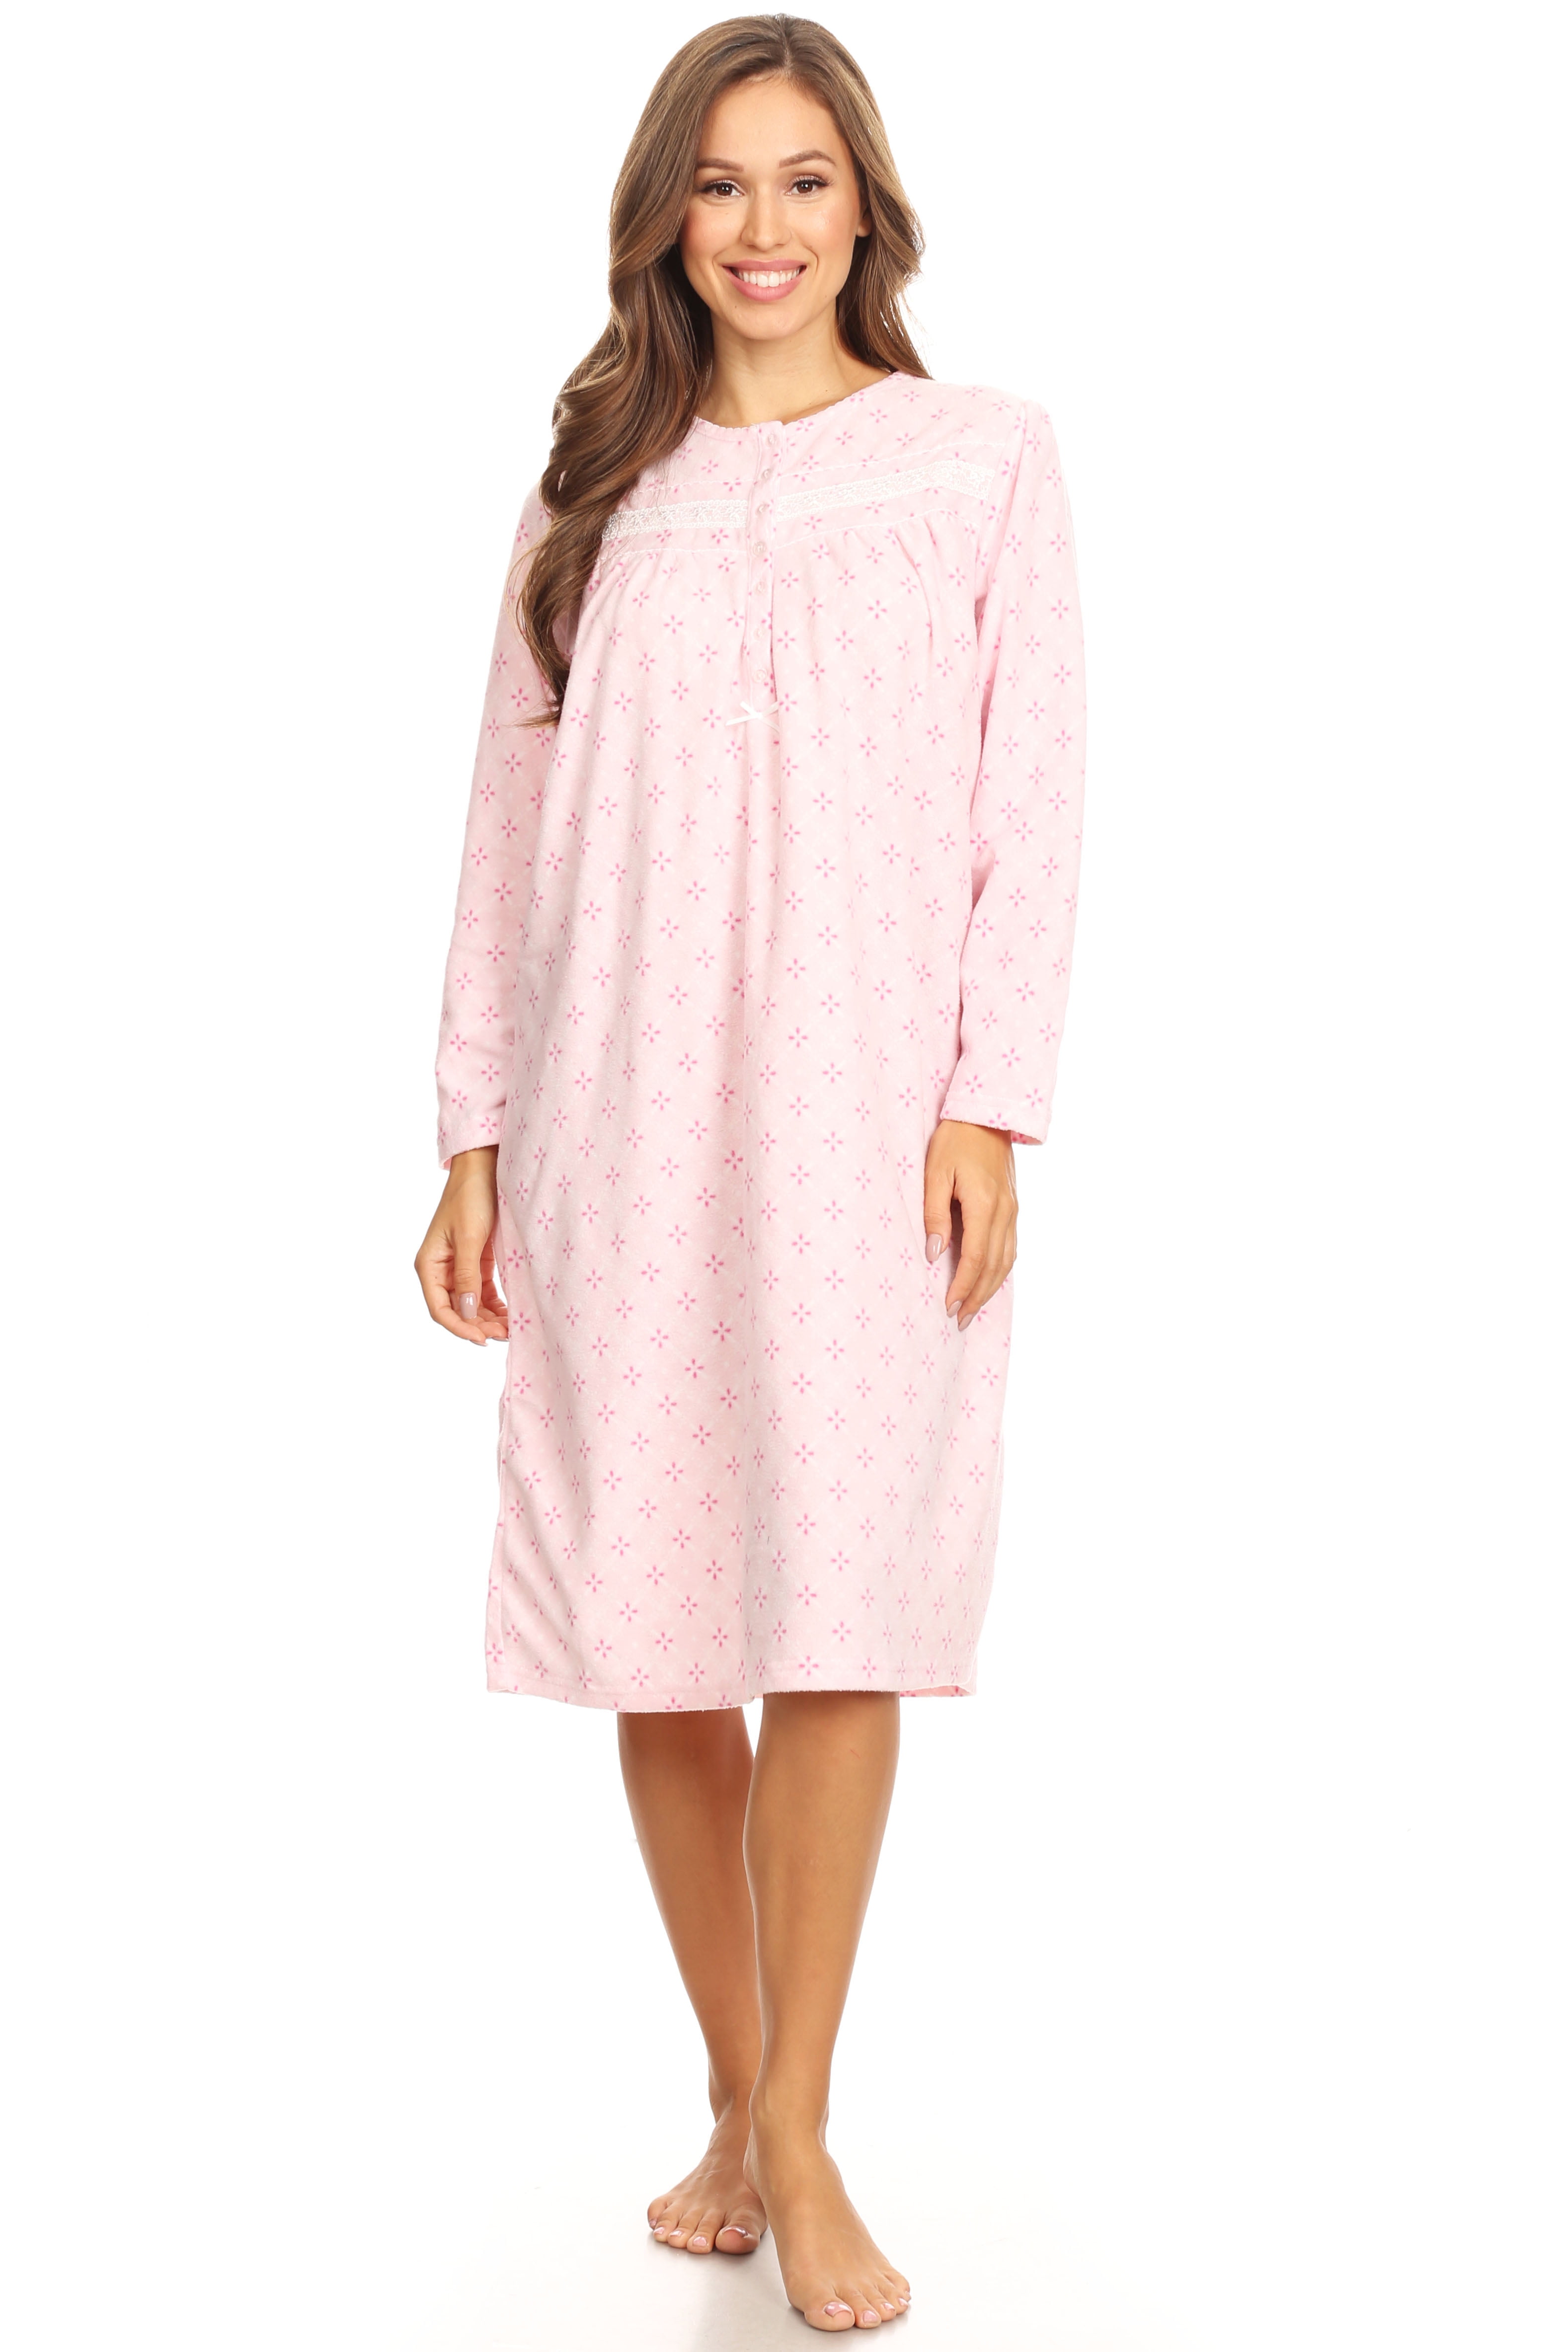 4028 Fleece Womens Nightgown Sleepwear Pajamas Woman Long Sleeve Sleep ...